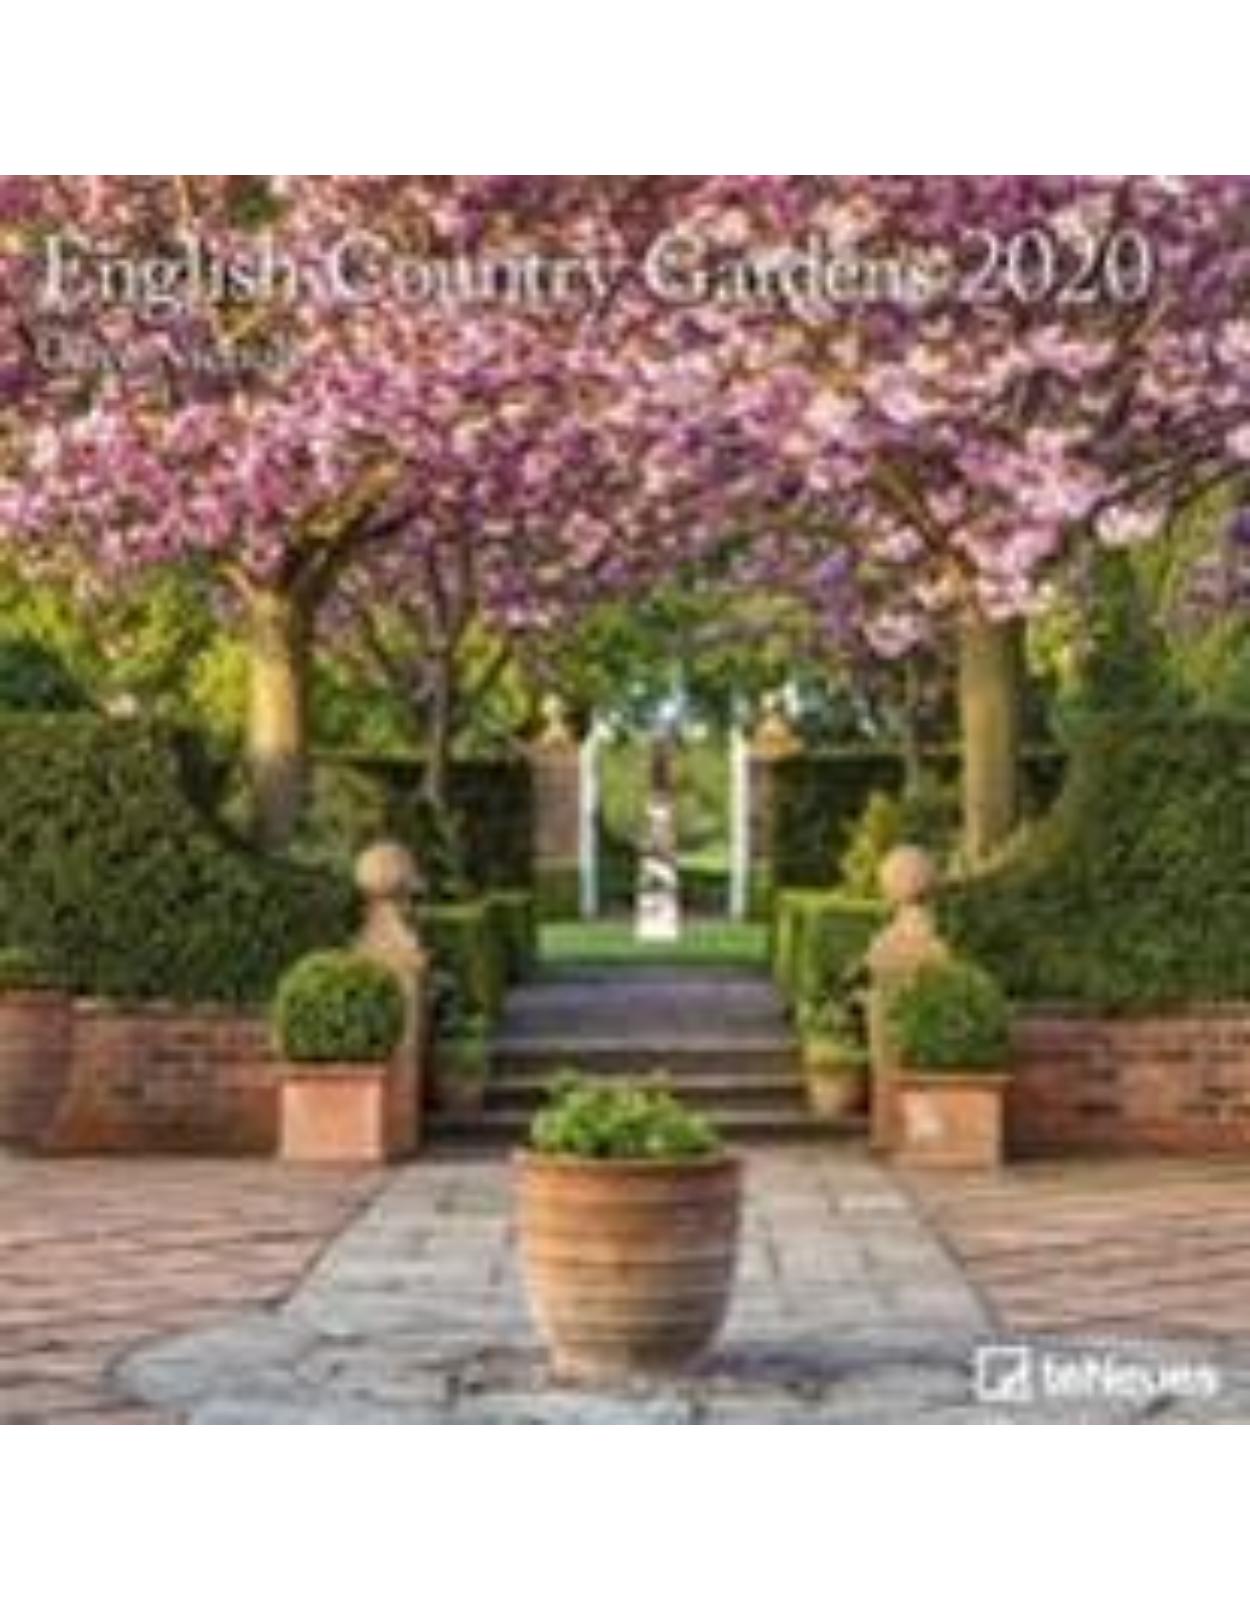 English Country Gardens 2020